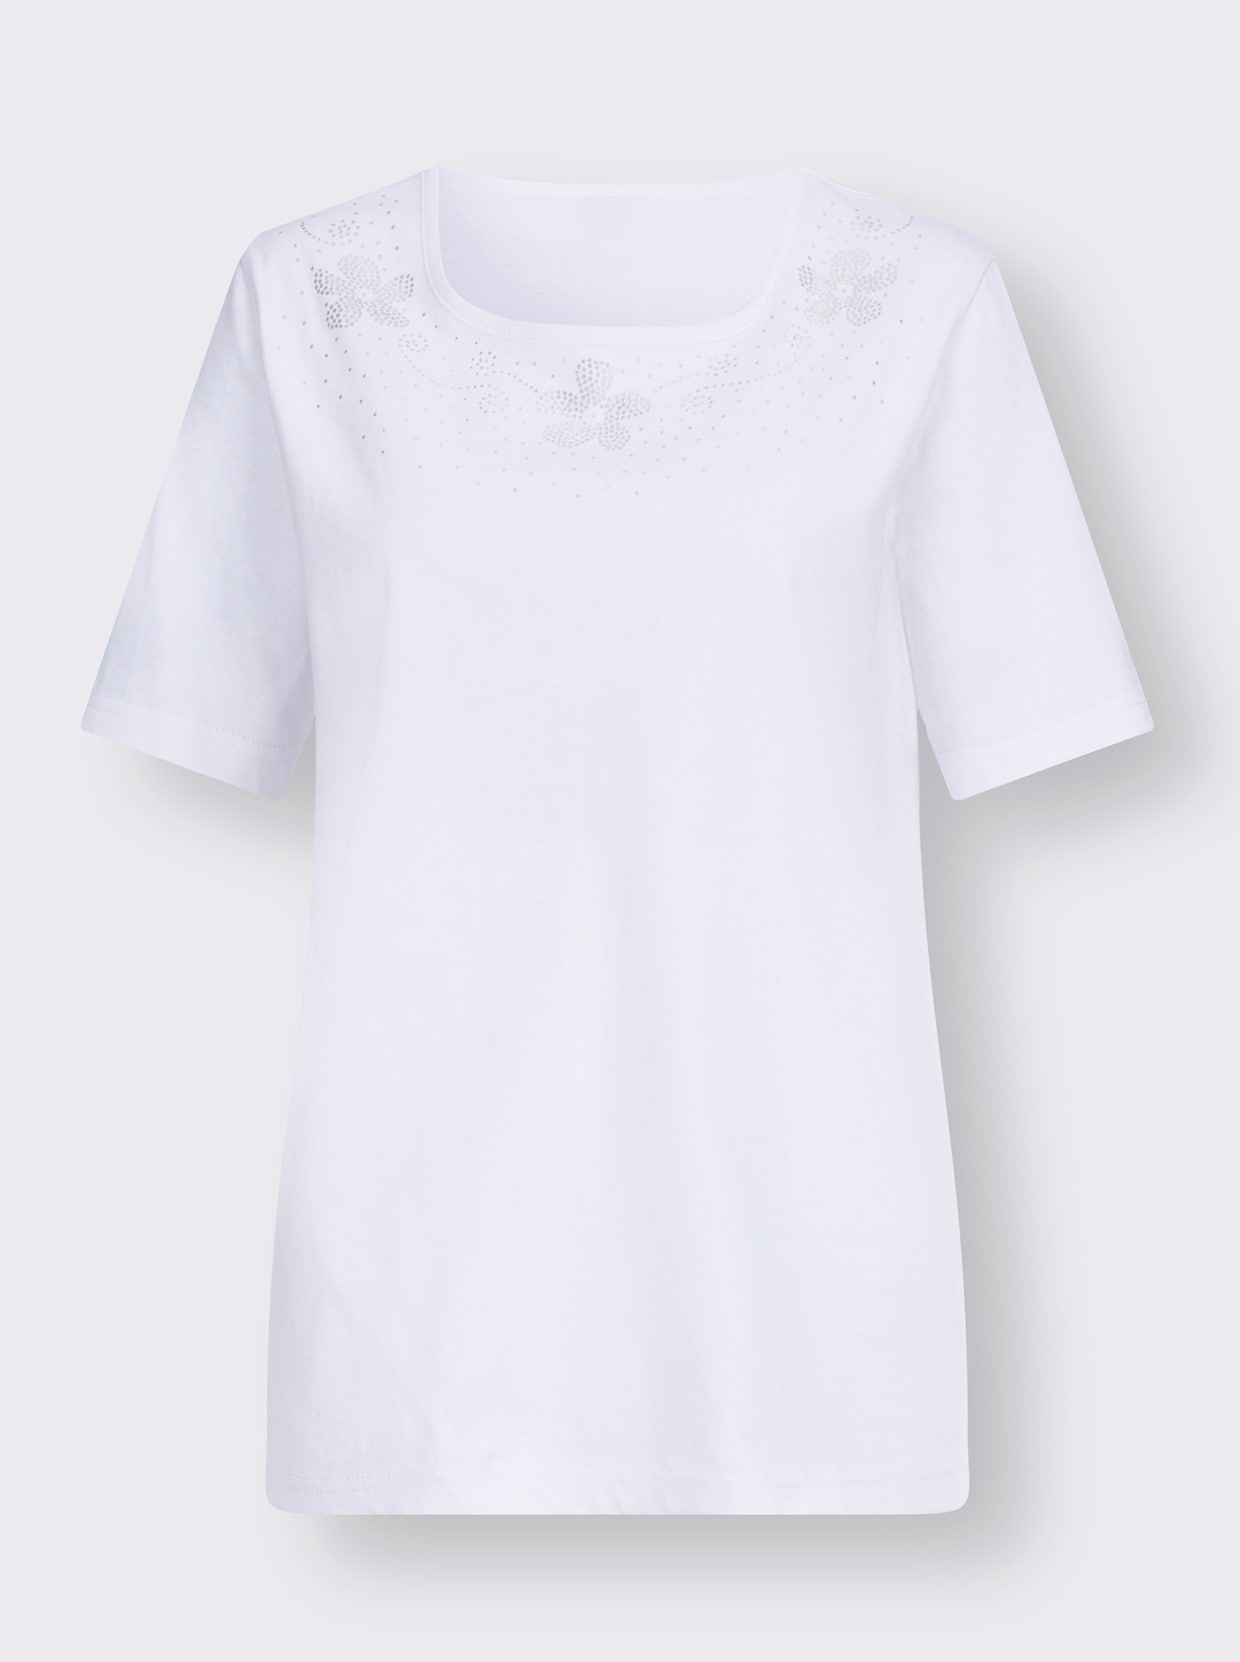 Kurzarm-Shirt - weiß-silberfarben